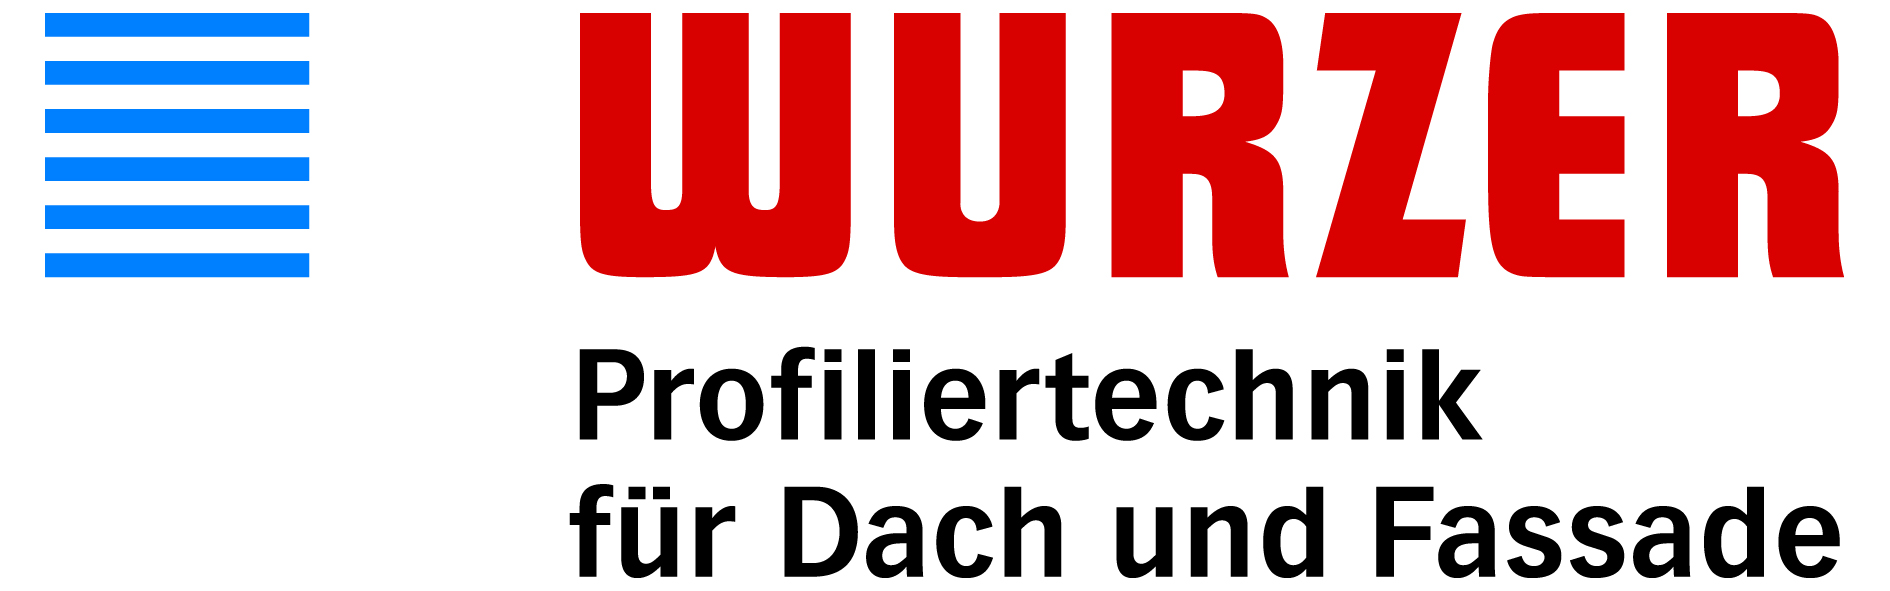 Wurzer Profiltechnik GmbH